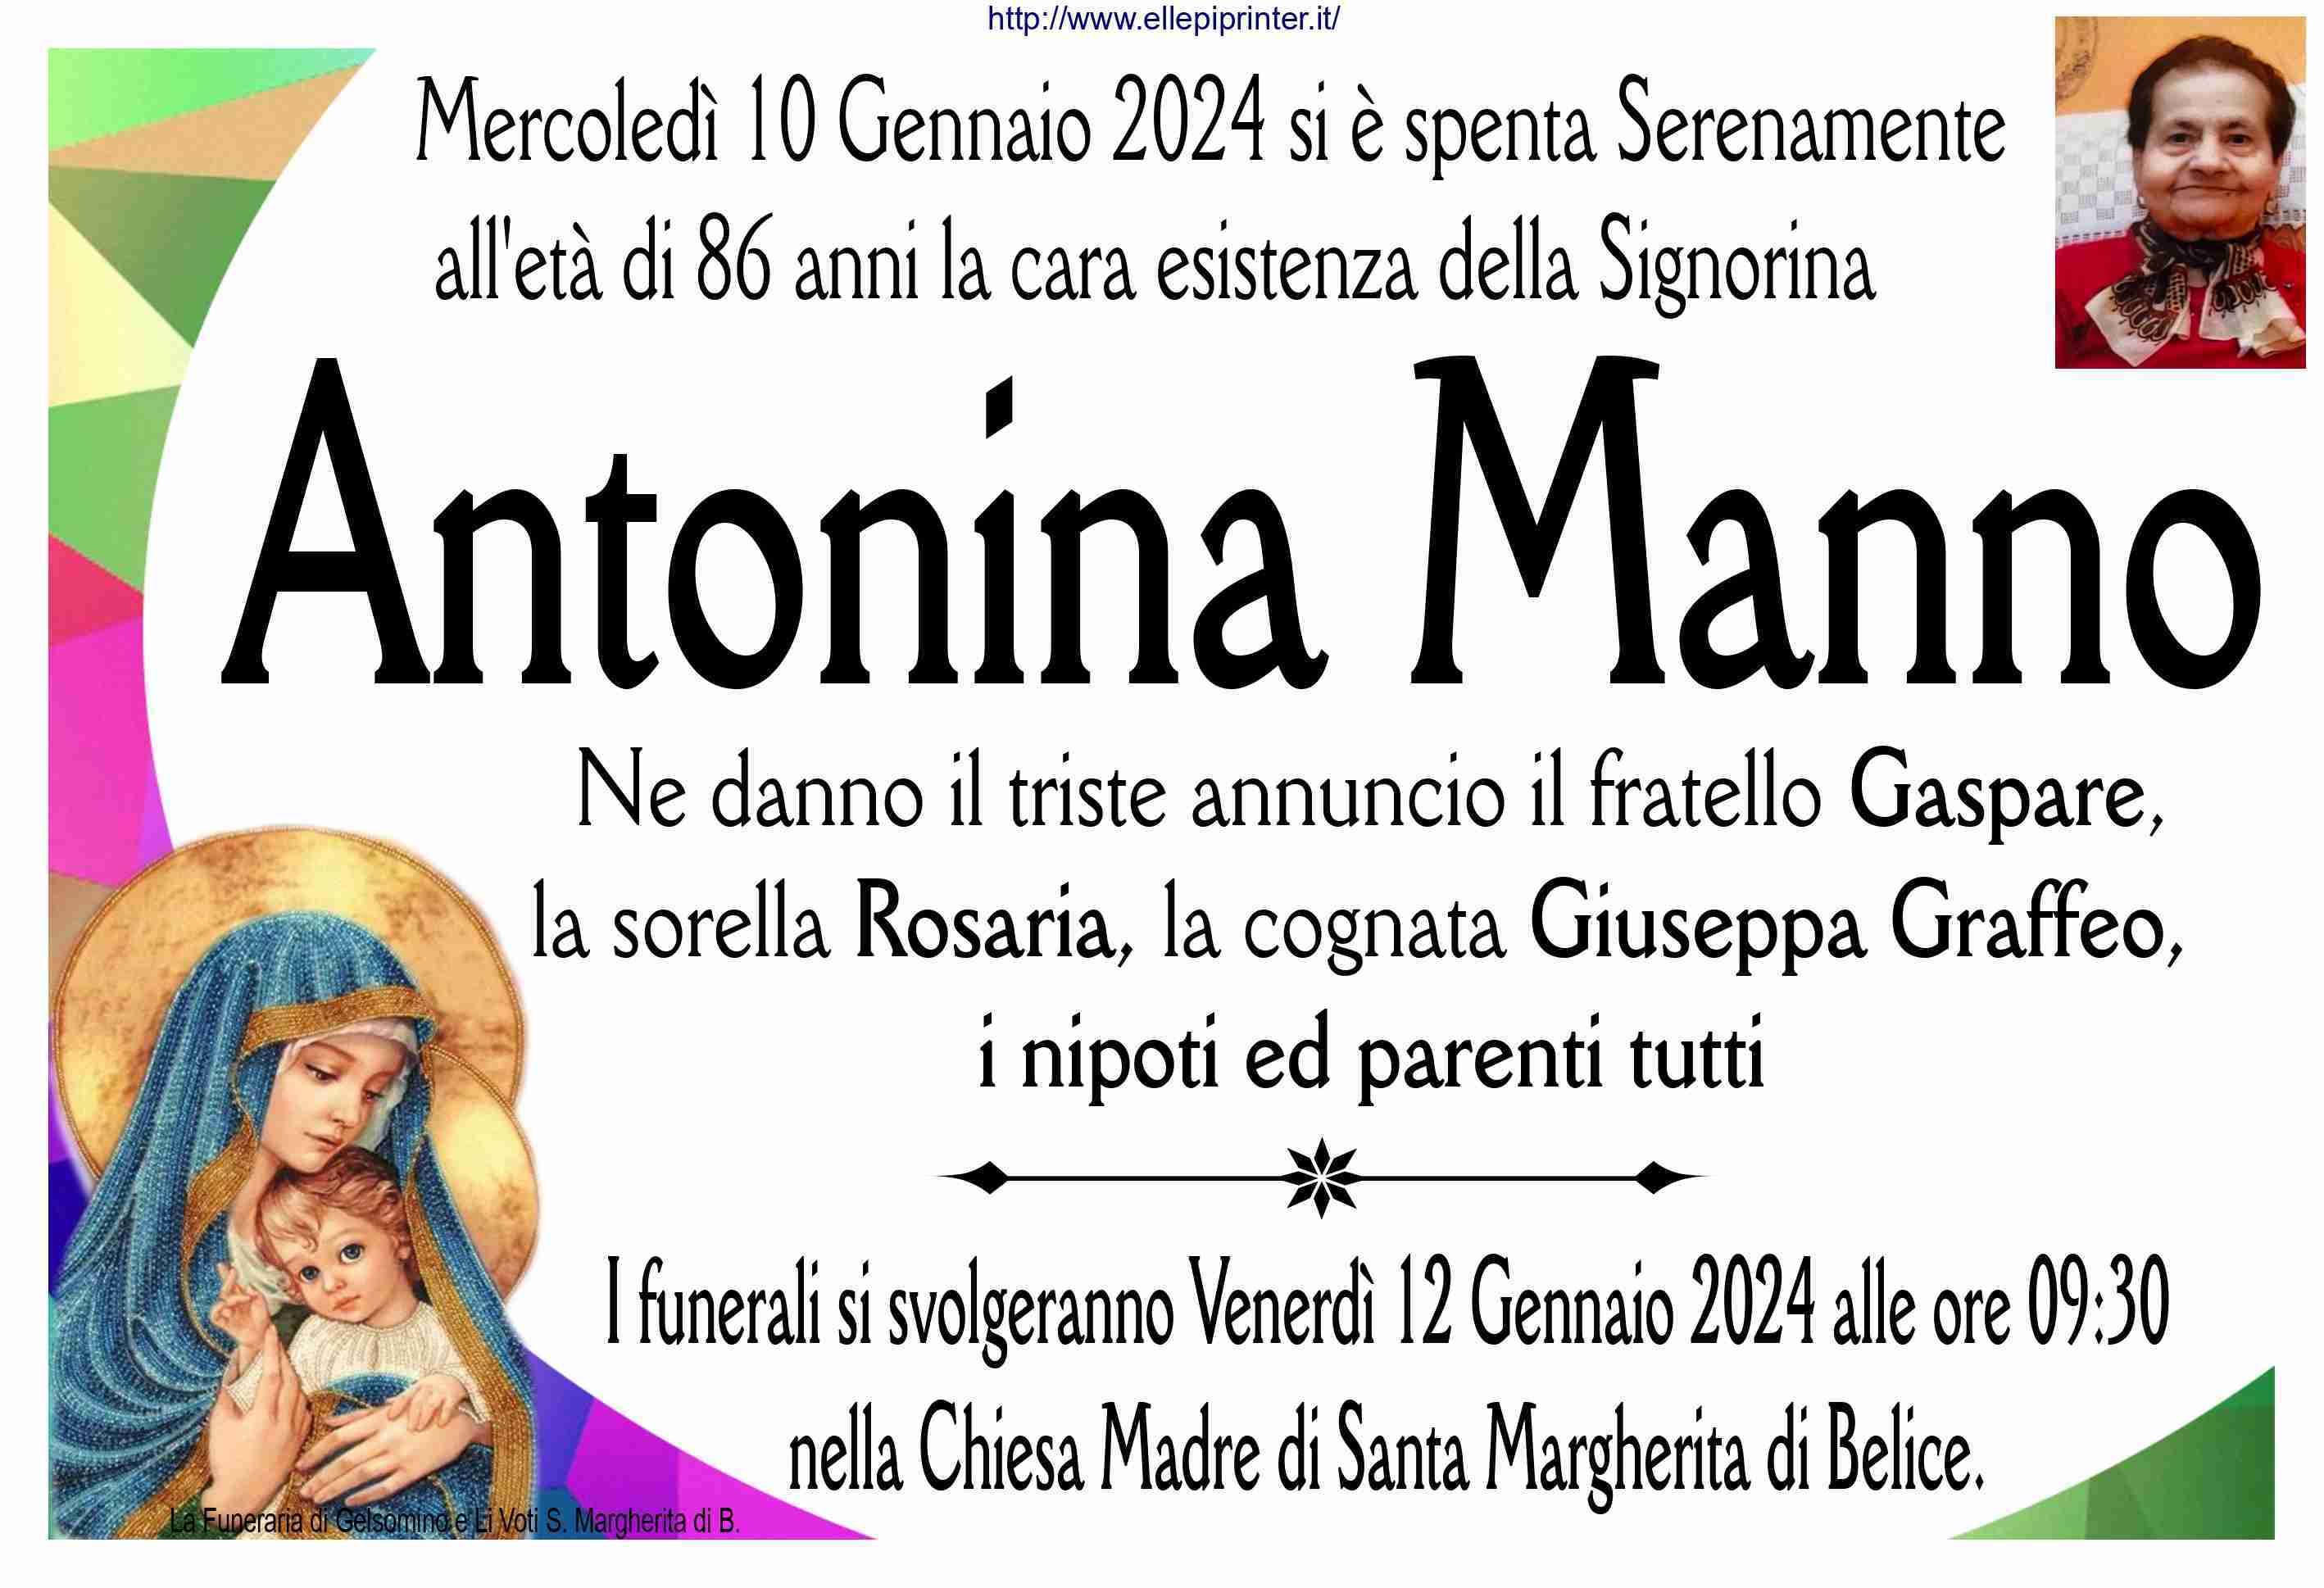 Antonina Manno